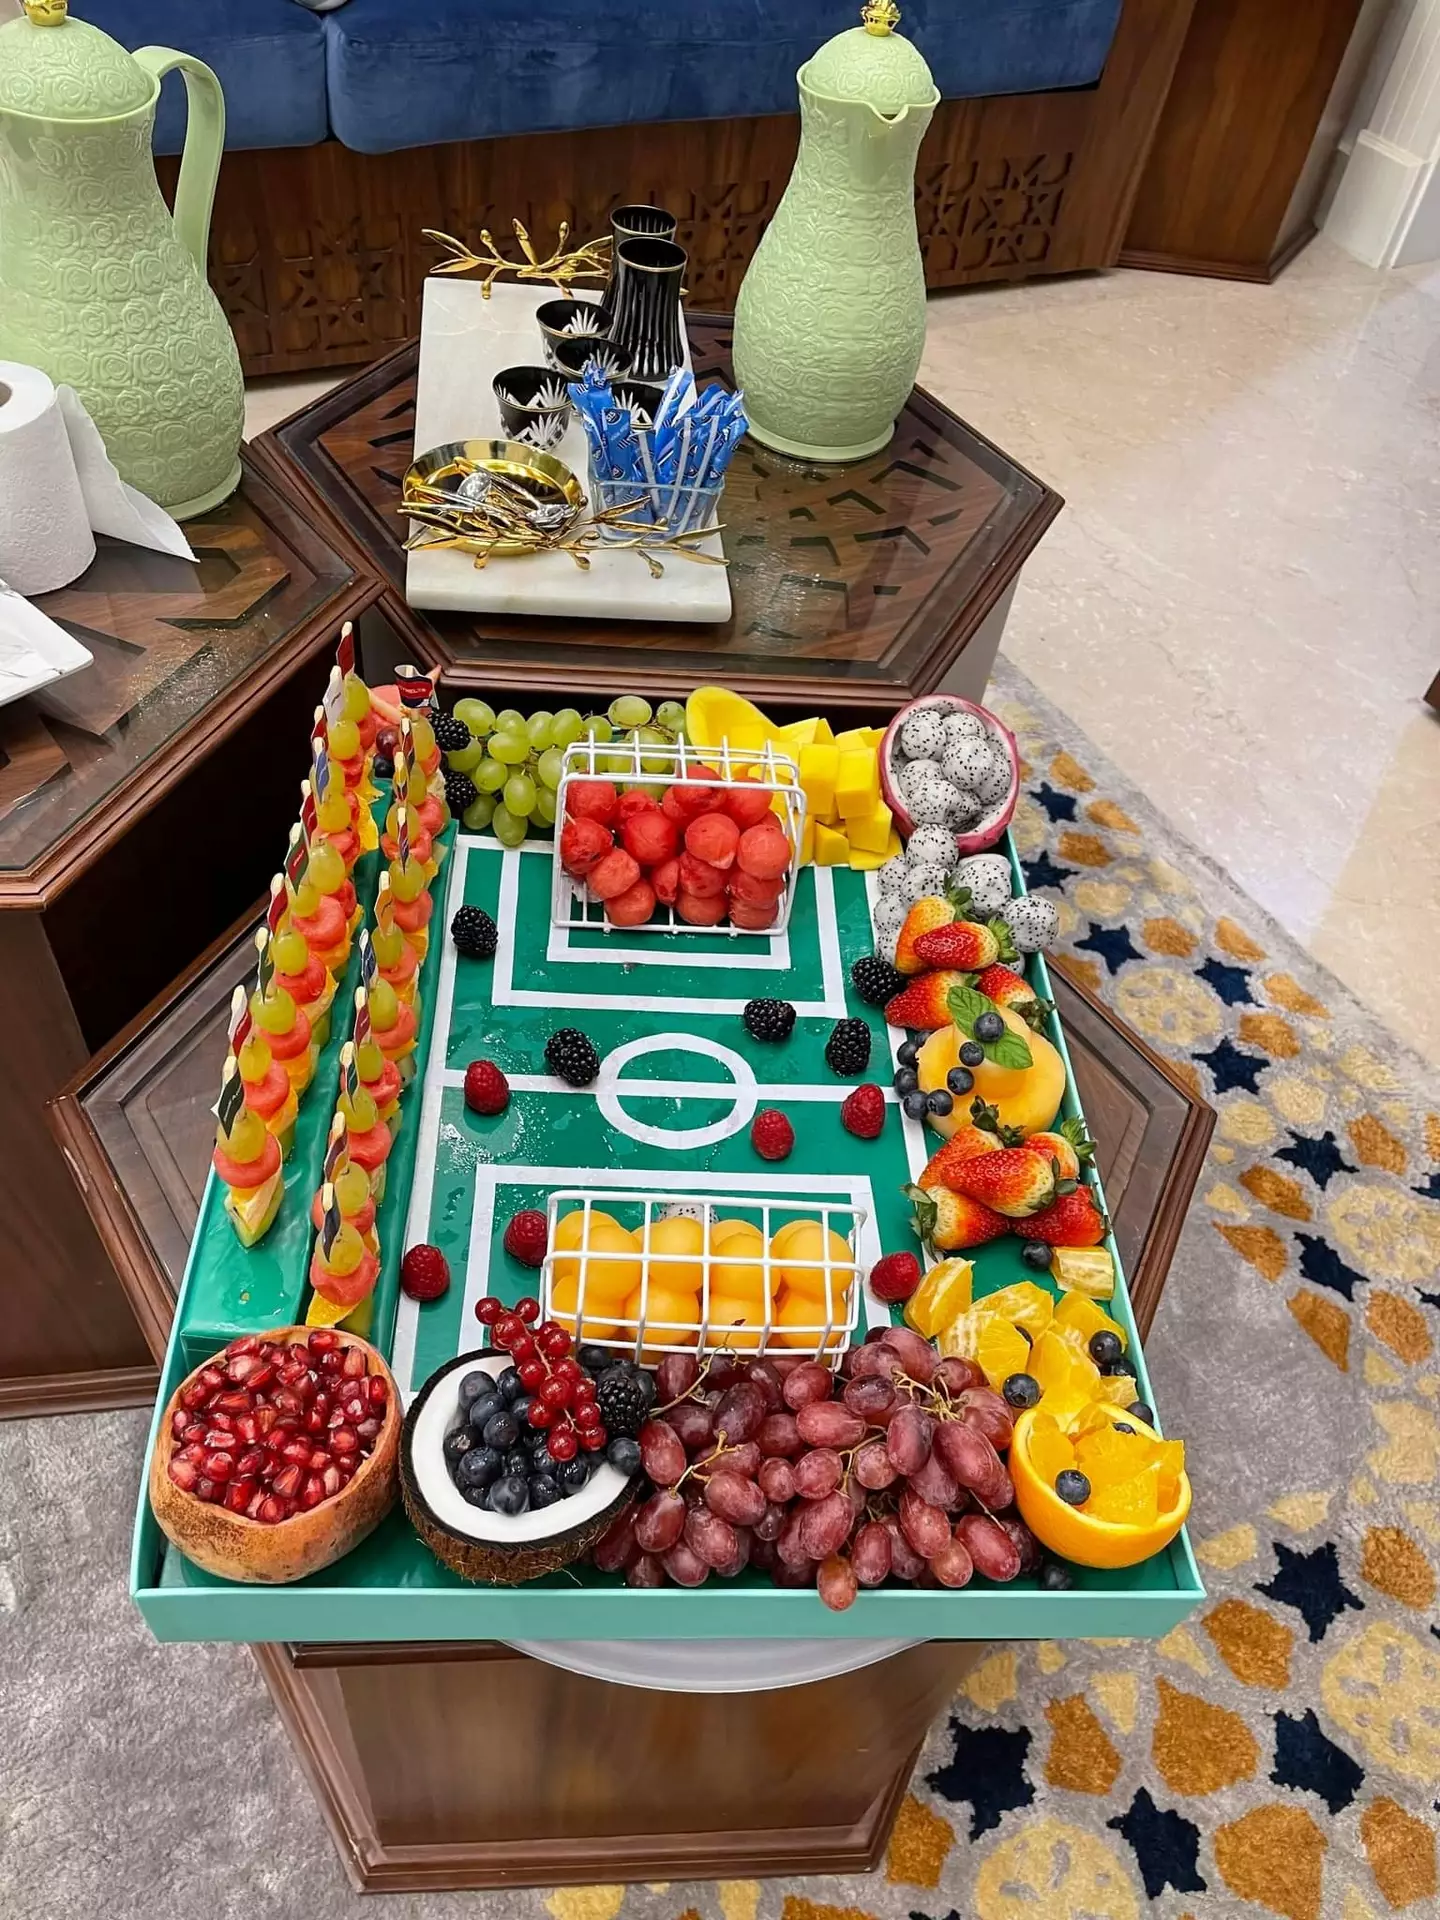 The football themed fruit.